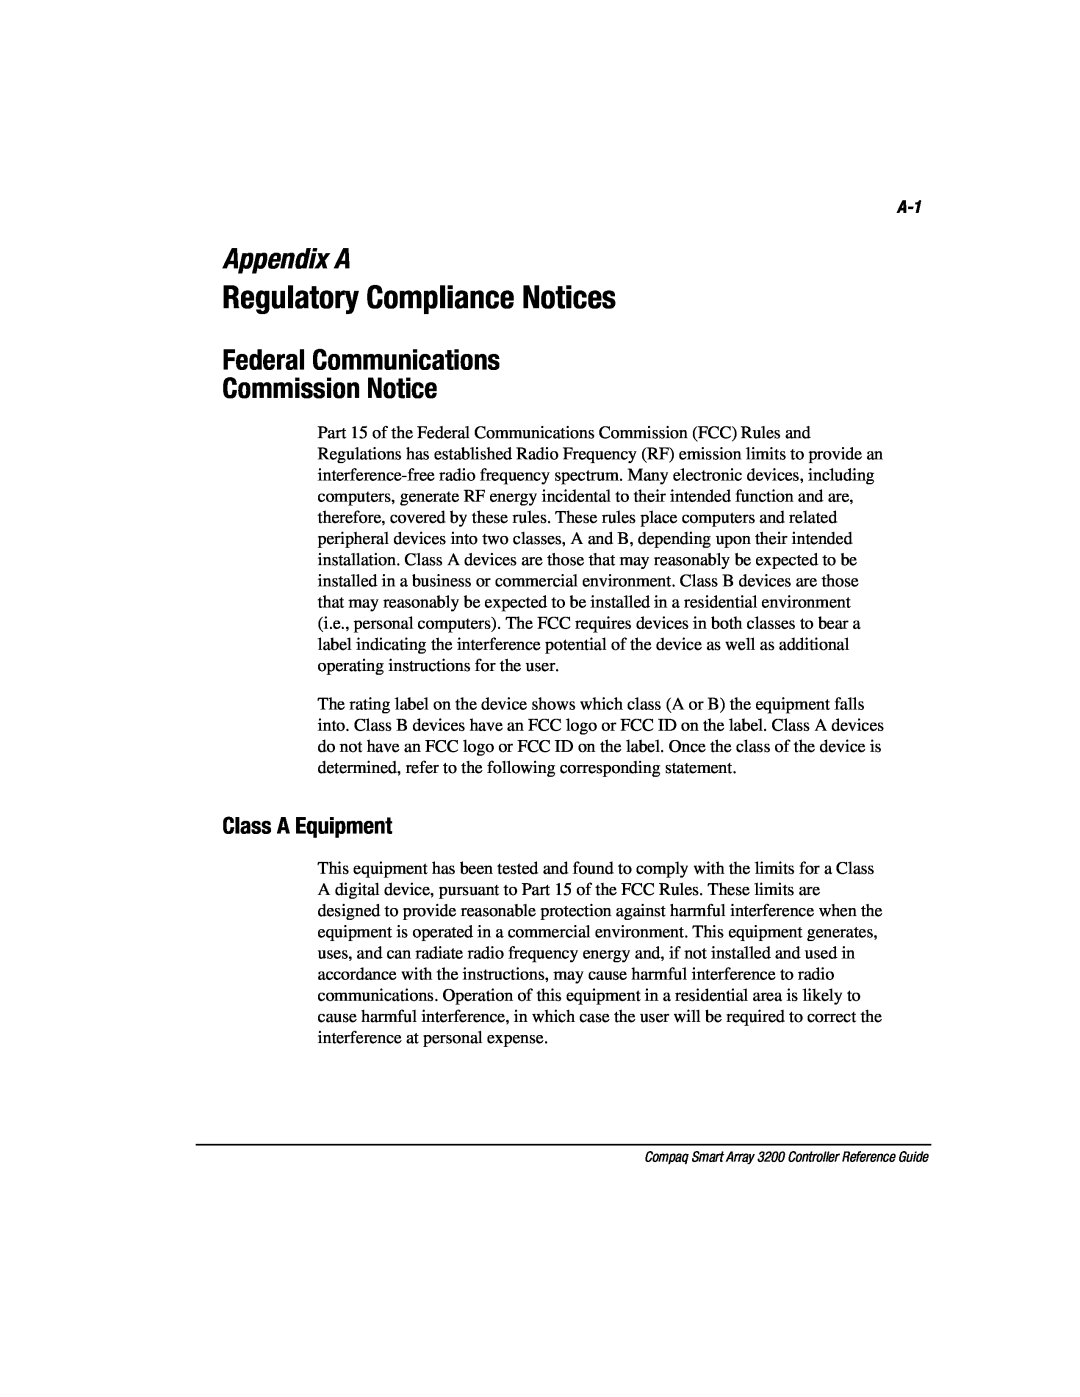 Compaq 3200 manual Regulatory Compliance Notices, Appendix A, Federal Communications Commission Notice, Class A Equipment 